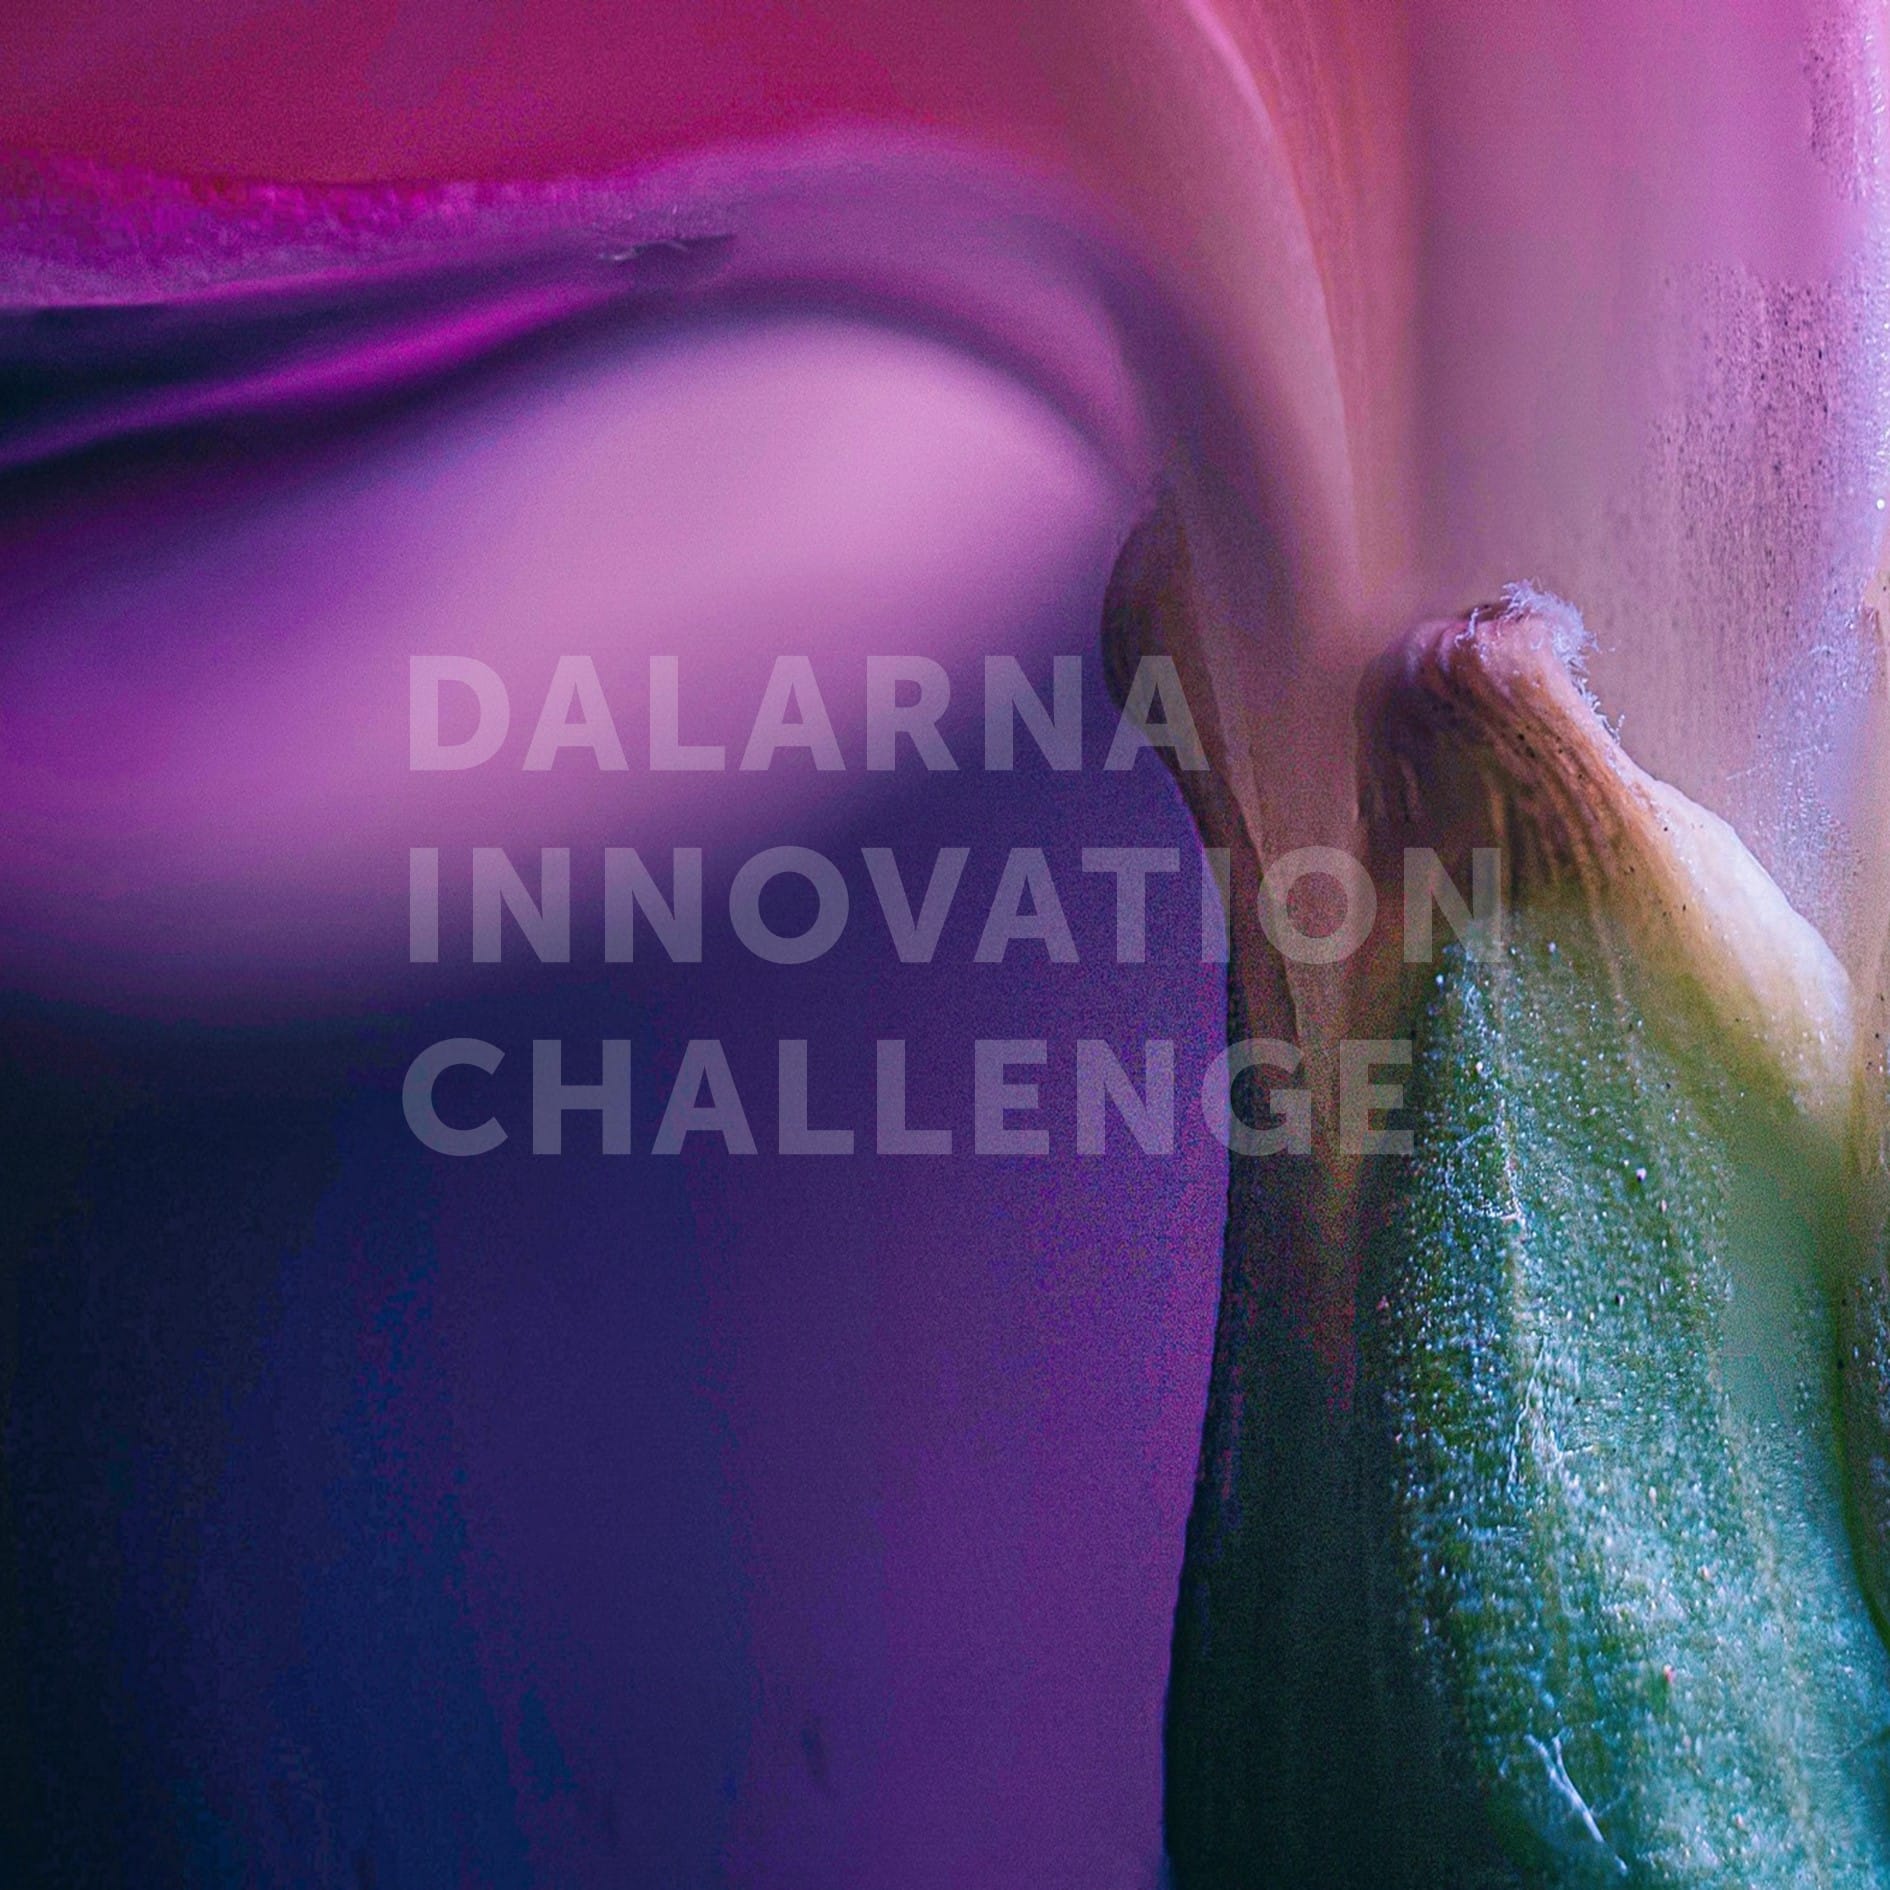 Dalarna Innovation Days Challenge